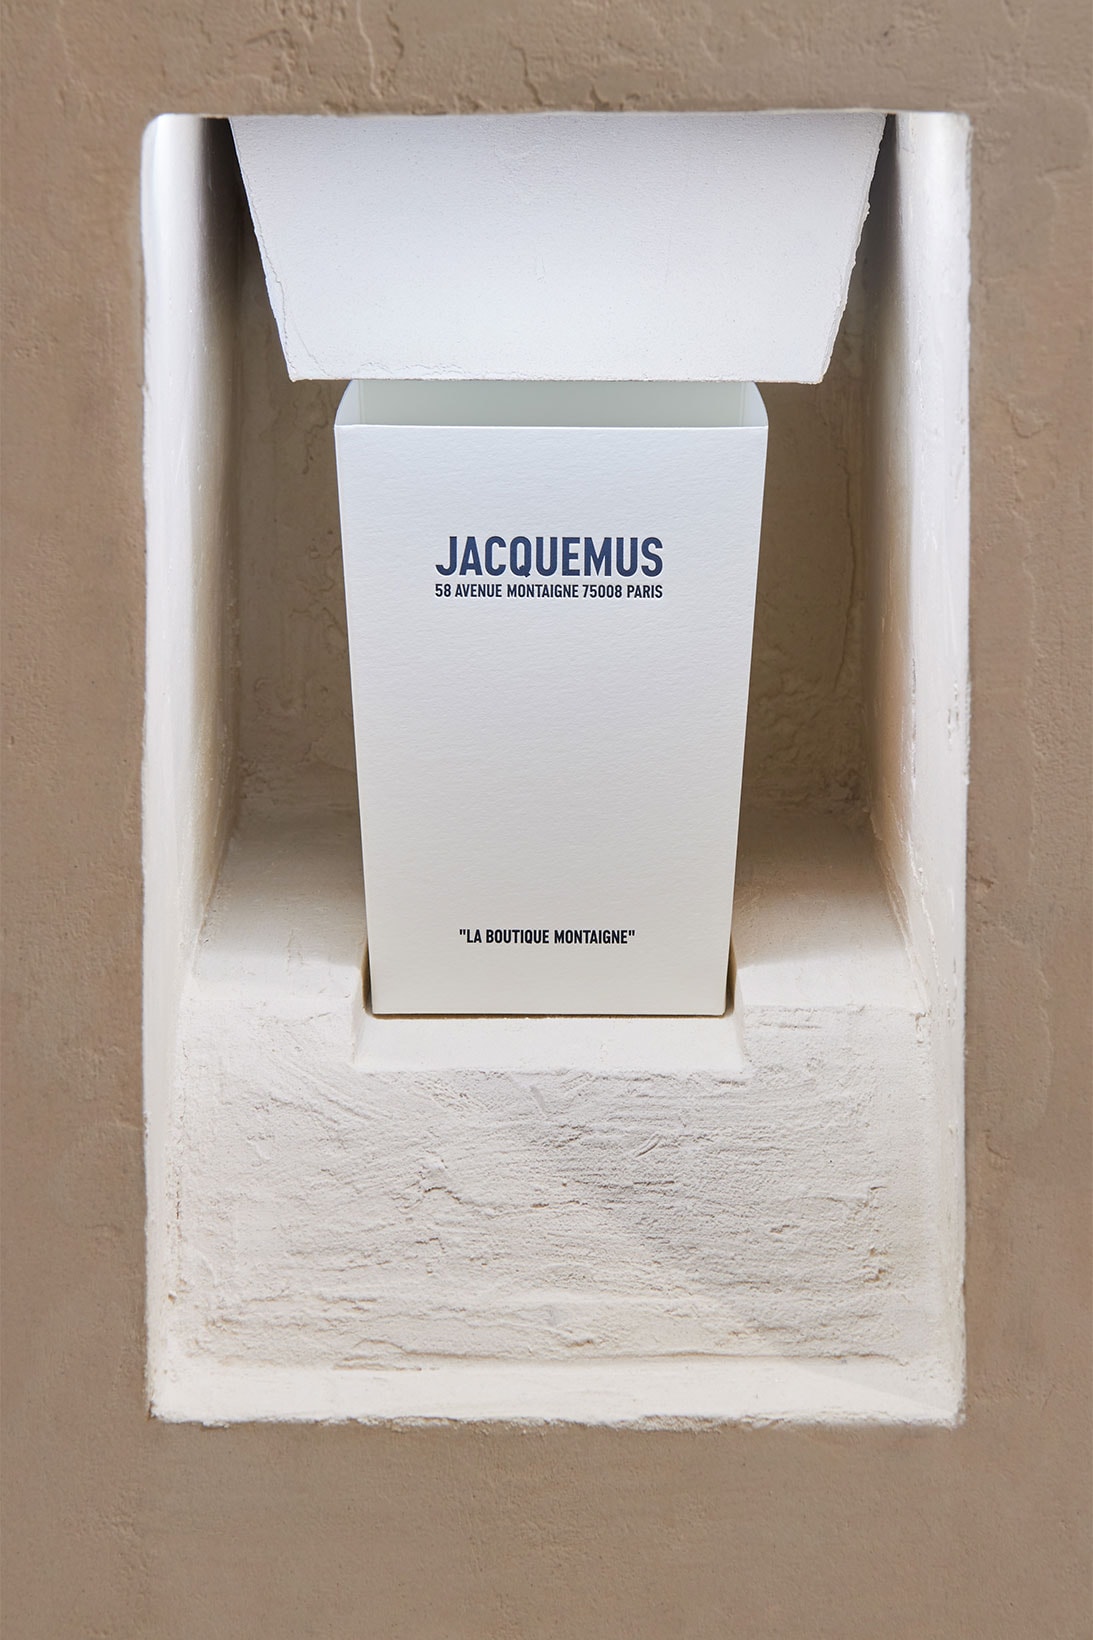 Jacquemus First La Boutique Montaigne Store Paris Interior Images Address Location Info